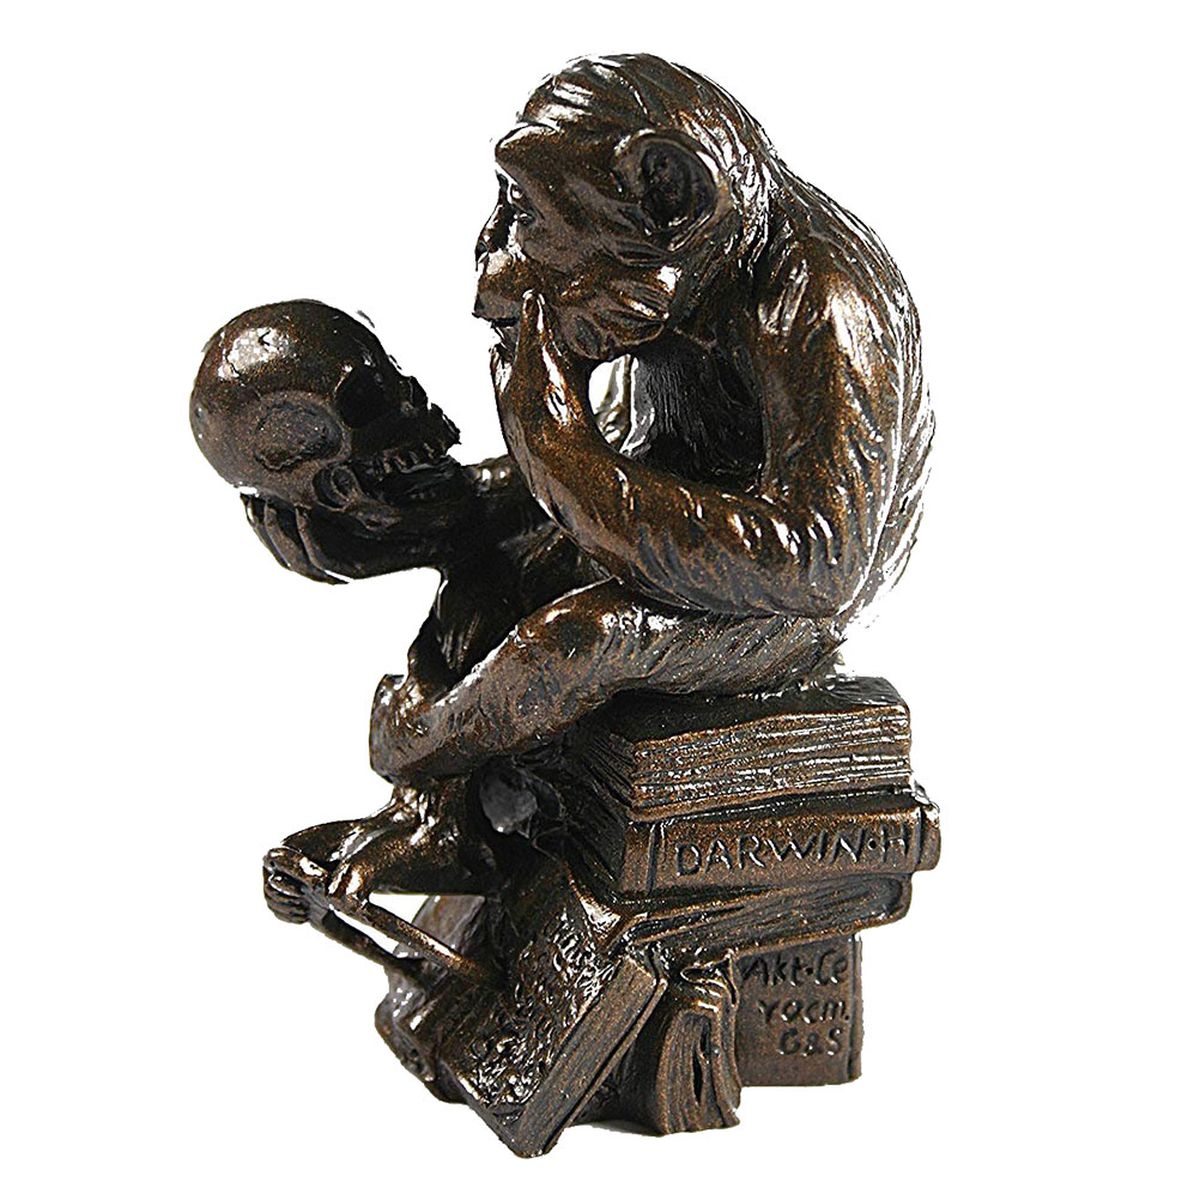 Figurine reproduction Le Singe savant de Rheinhold 13 cm